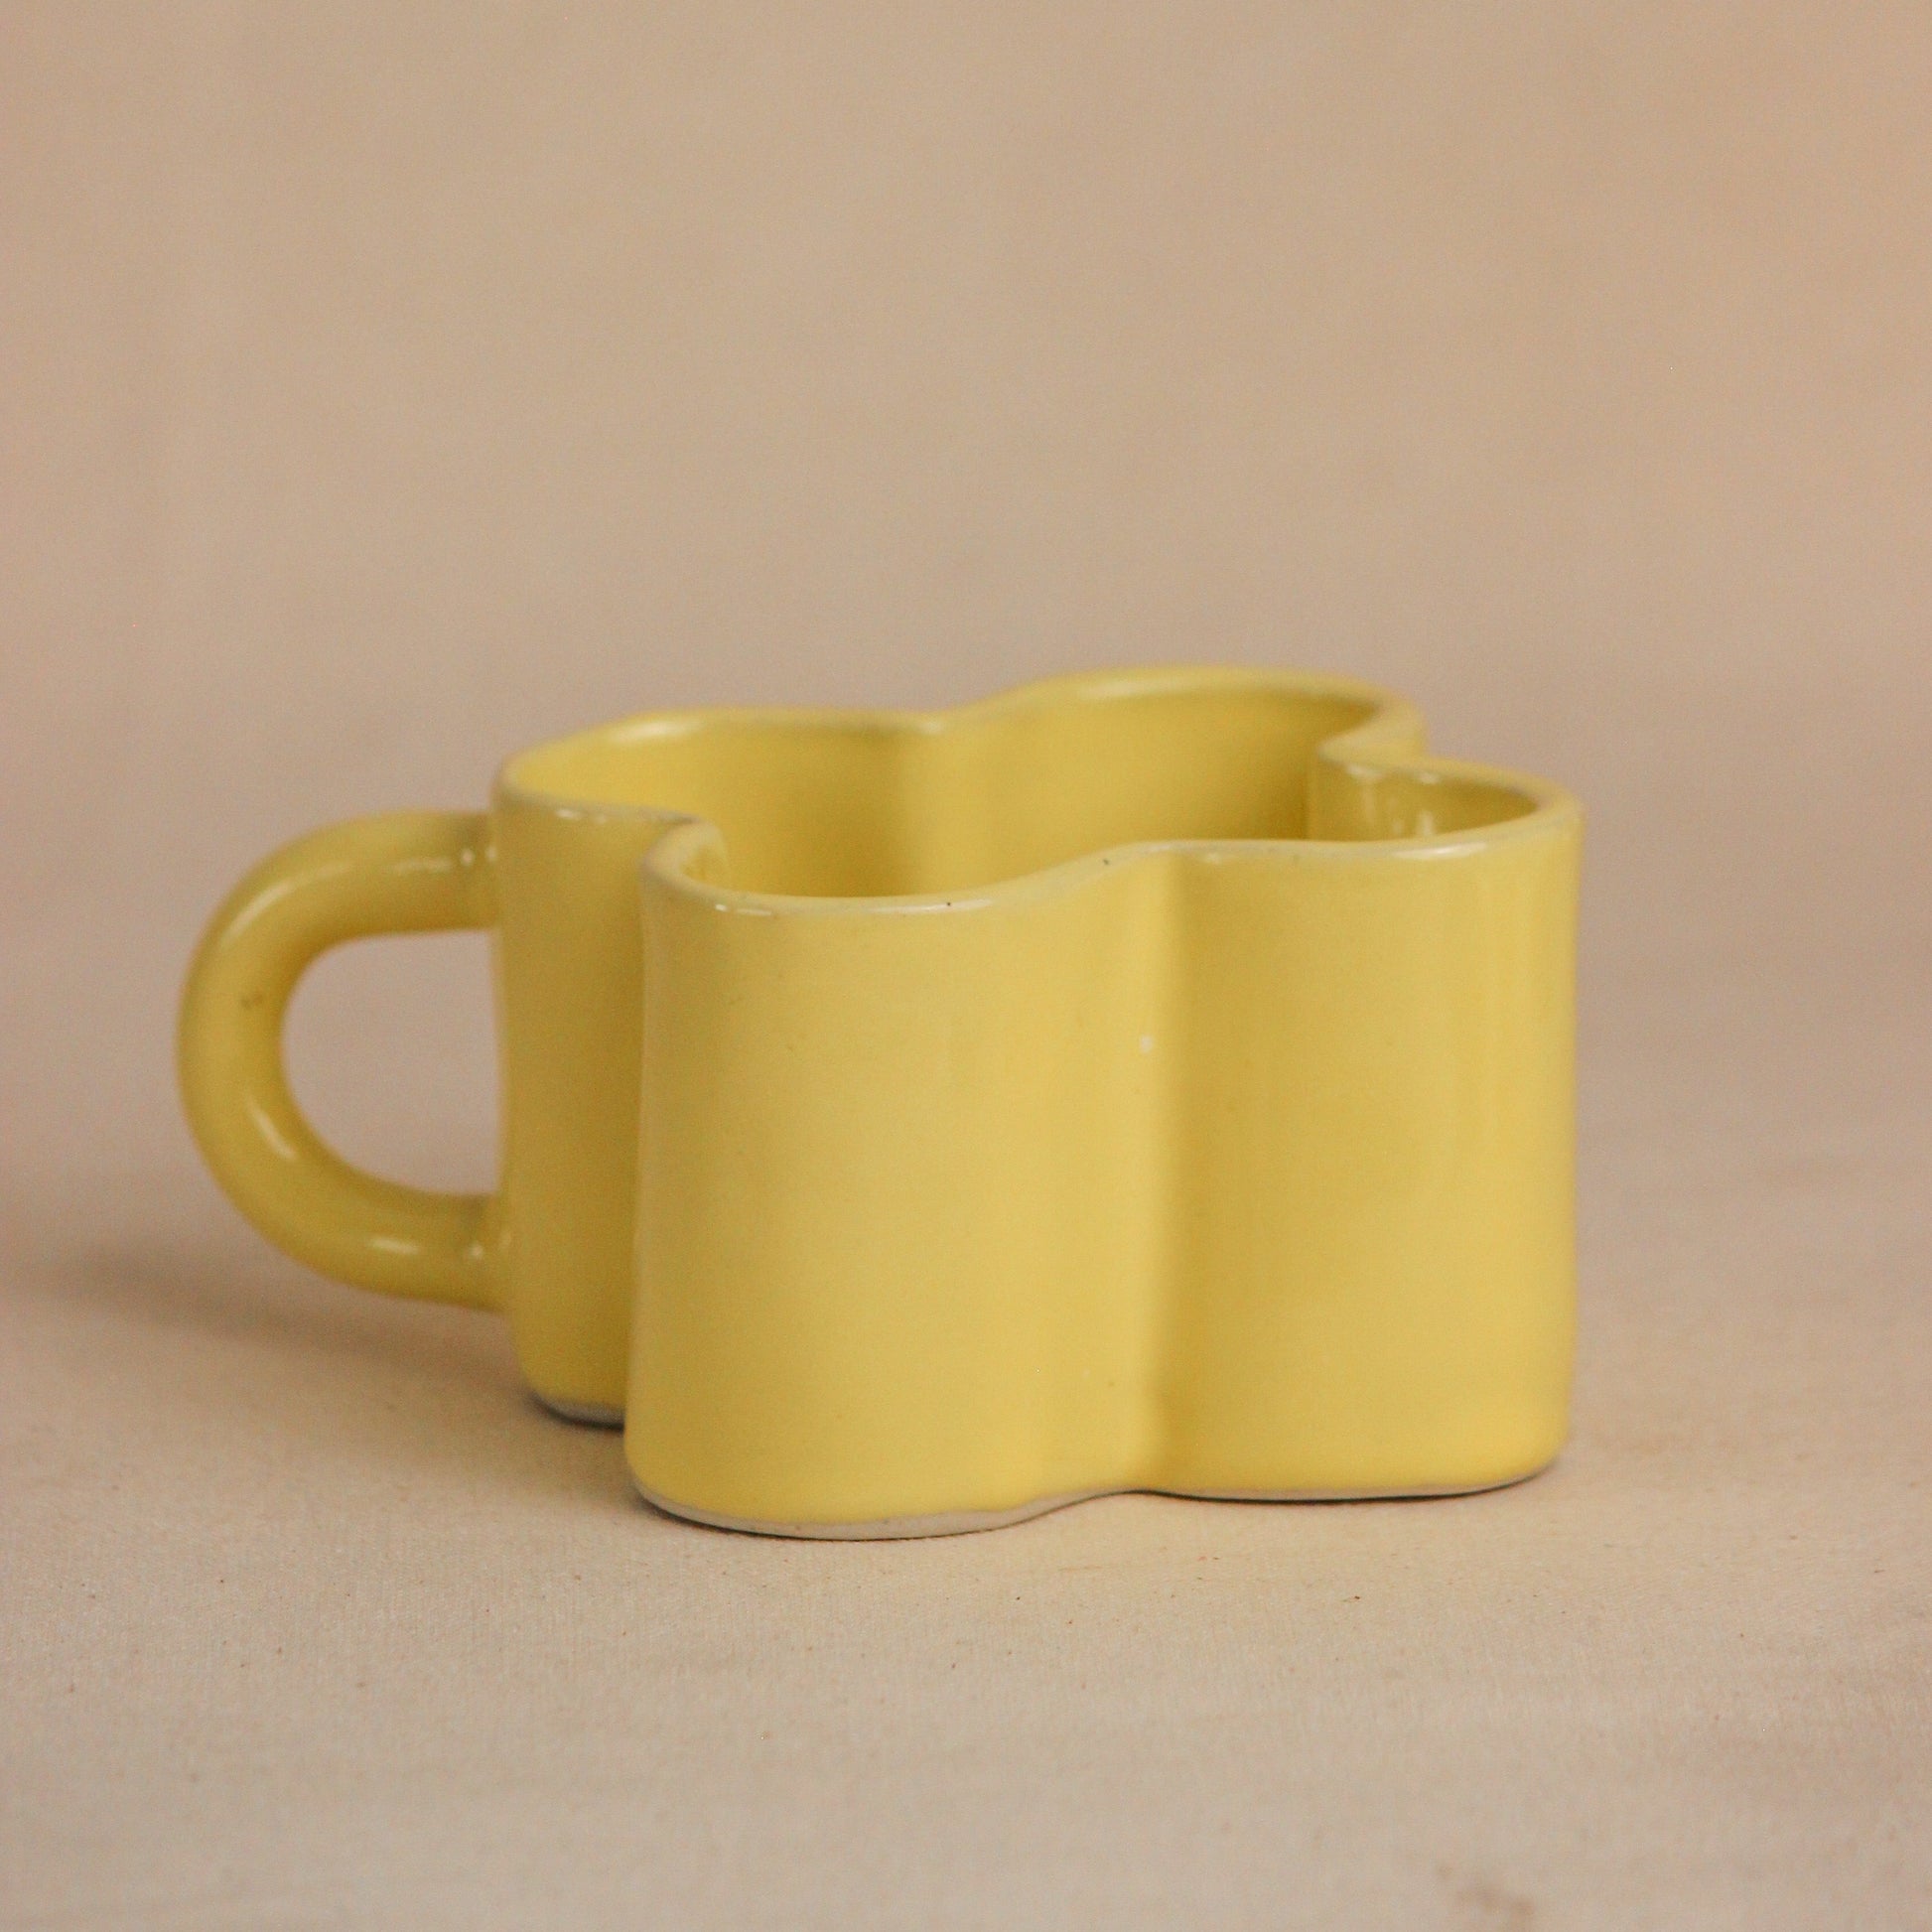 Premium Yellow Daisy Flower-Shaped Ceramic Cappuccino Mug for Coffee, Tea or Milk